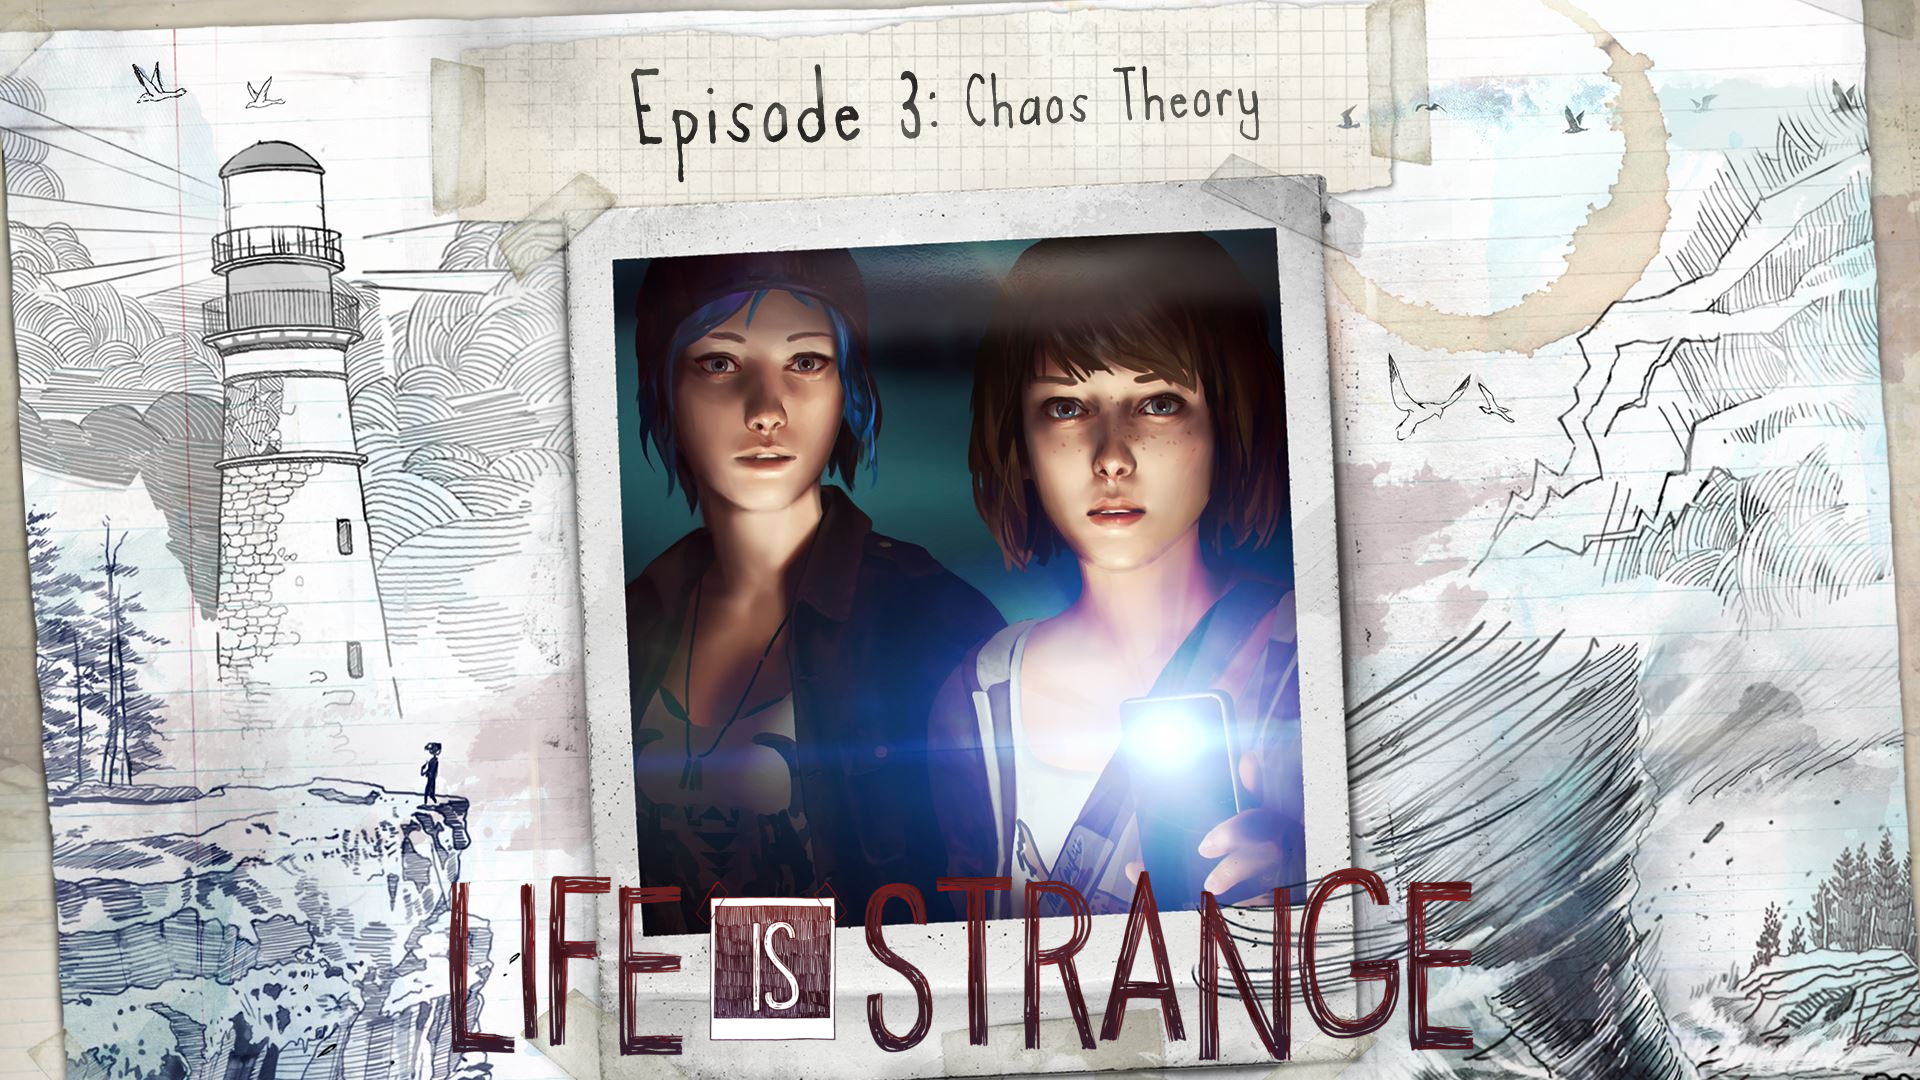 Life is strange episode